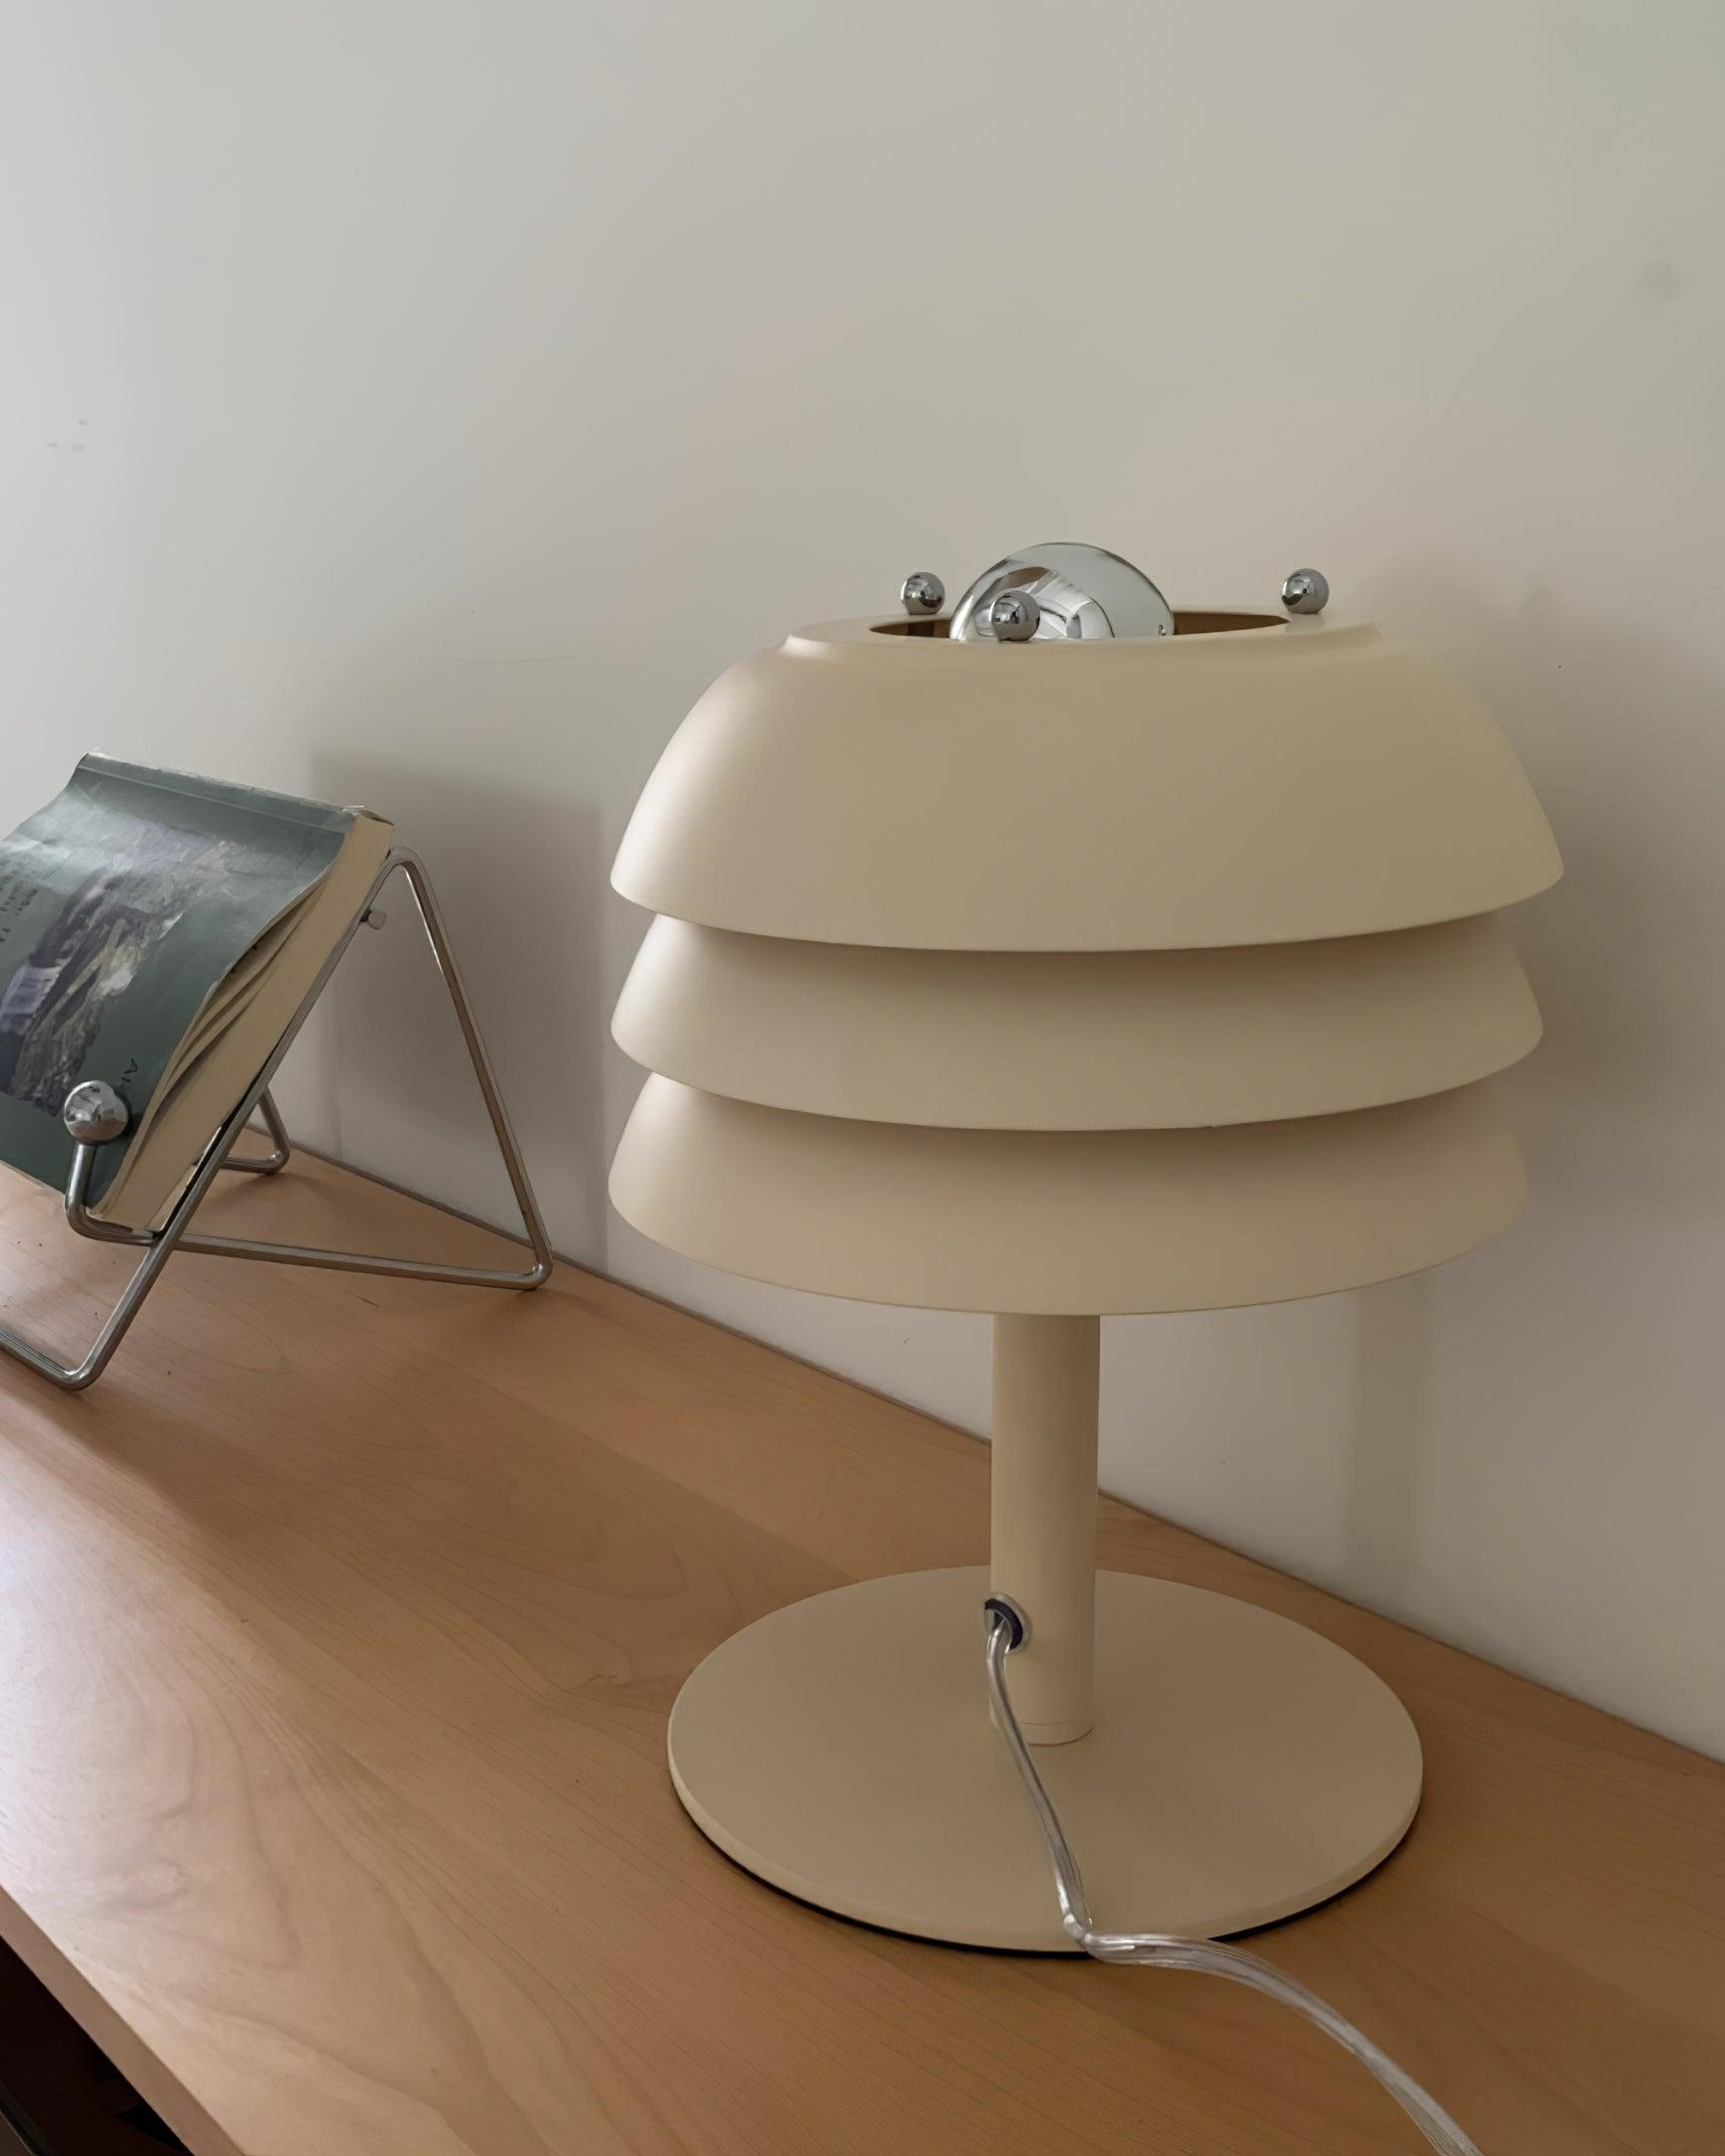 Aulenti Table Lamp 7″- 9.8″